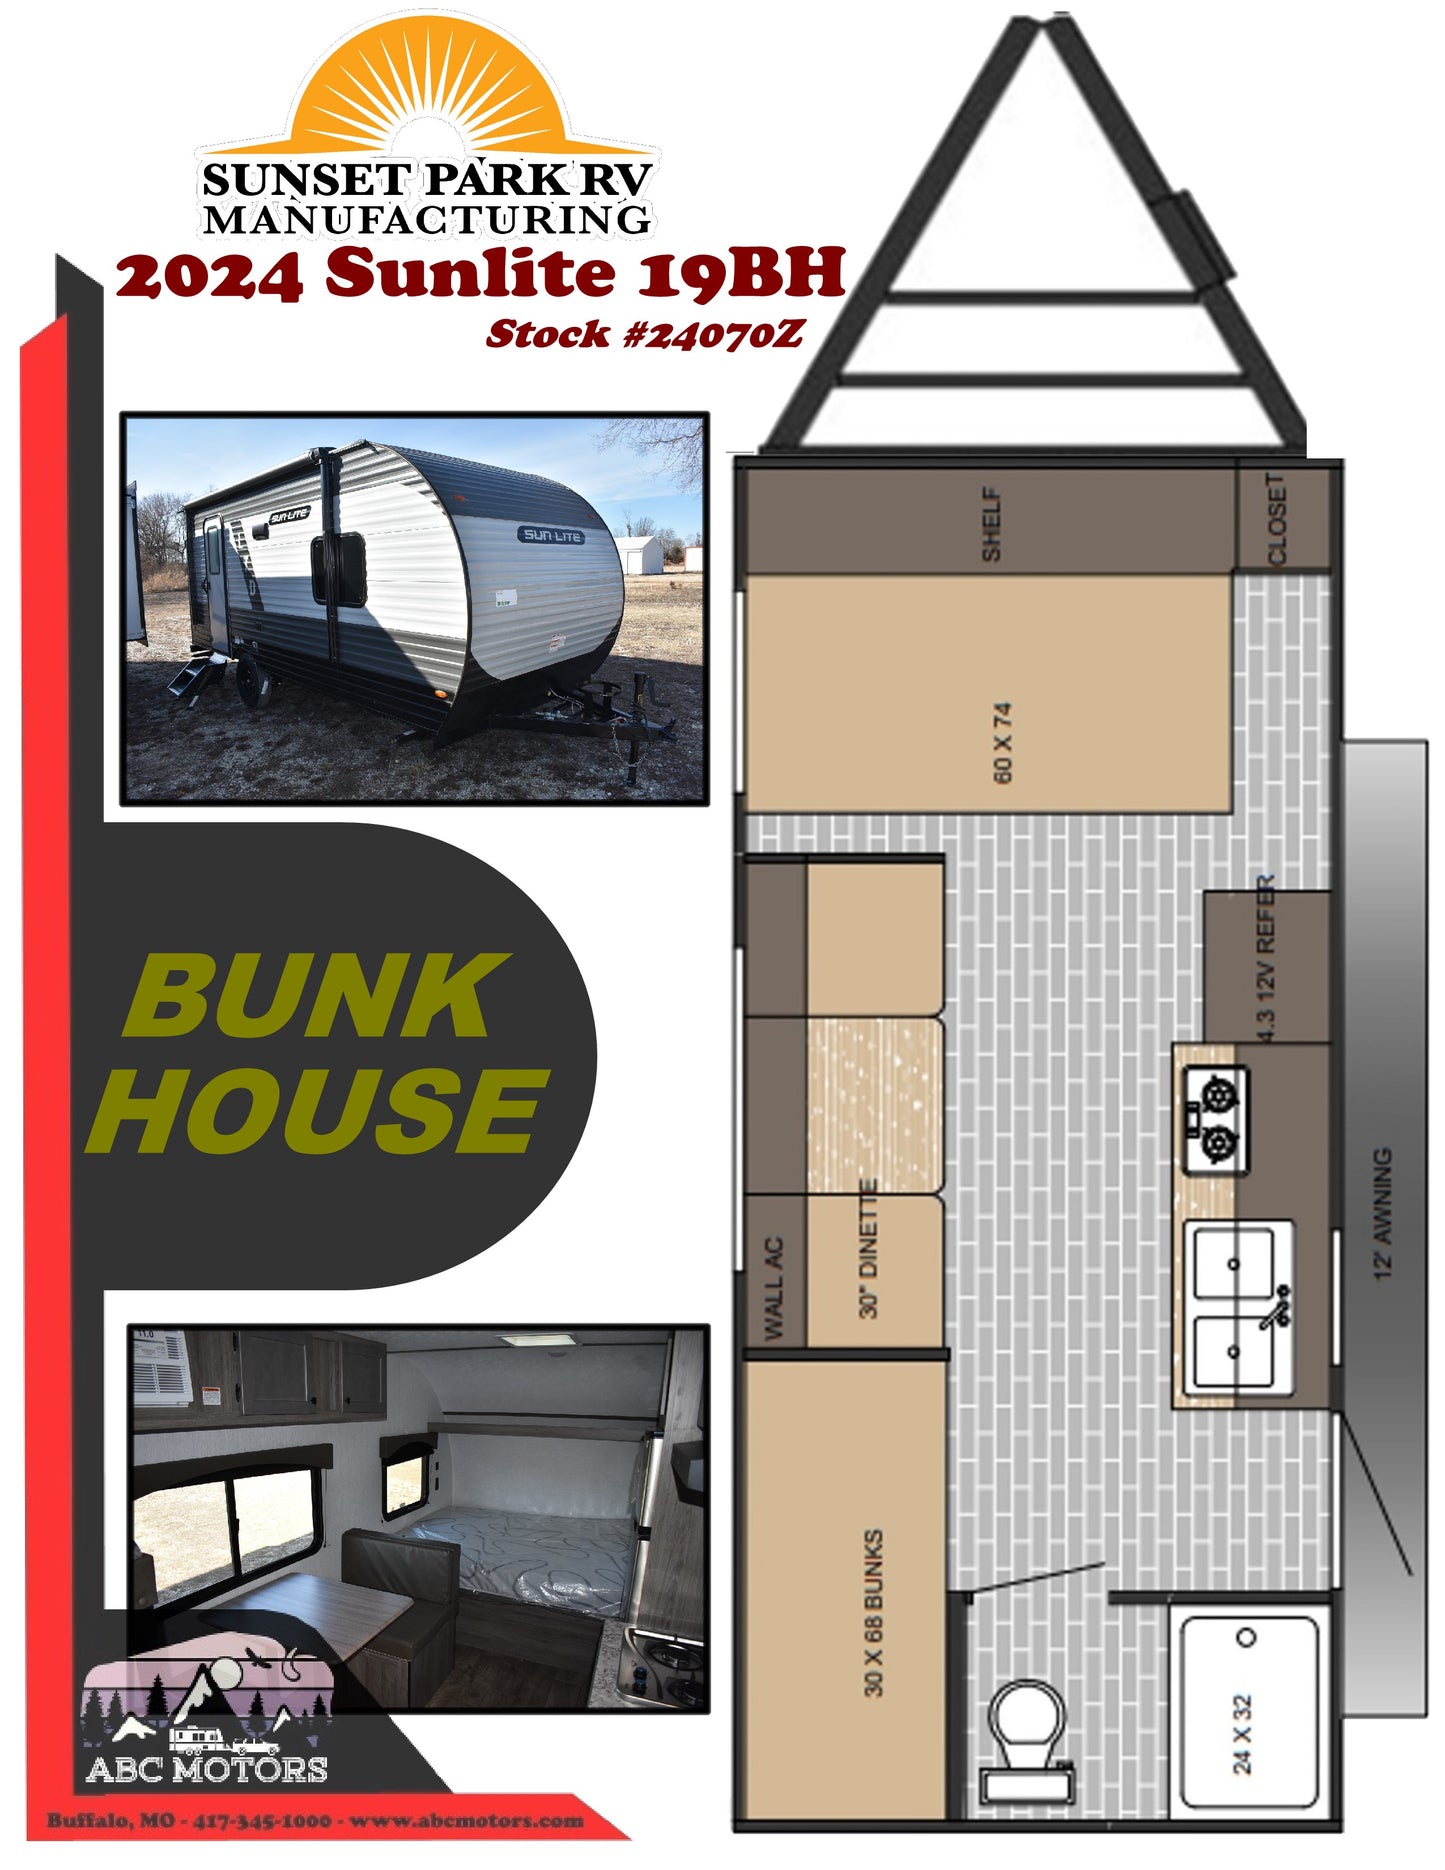 2024 Sunset Park Sunlite 19BH Camper - Length 21FT